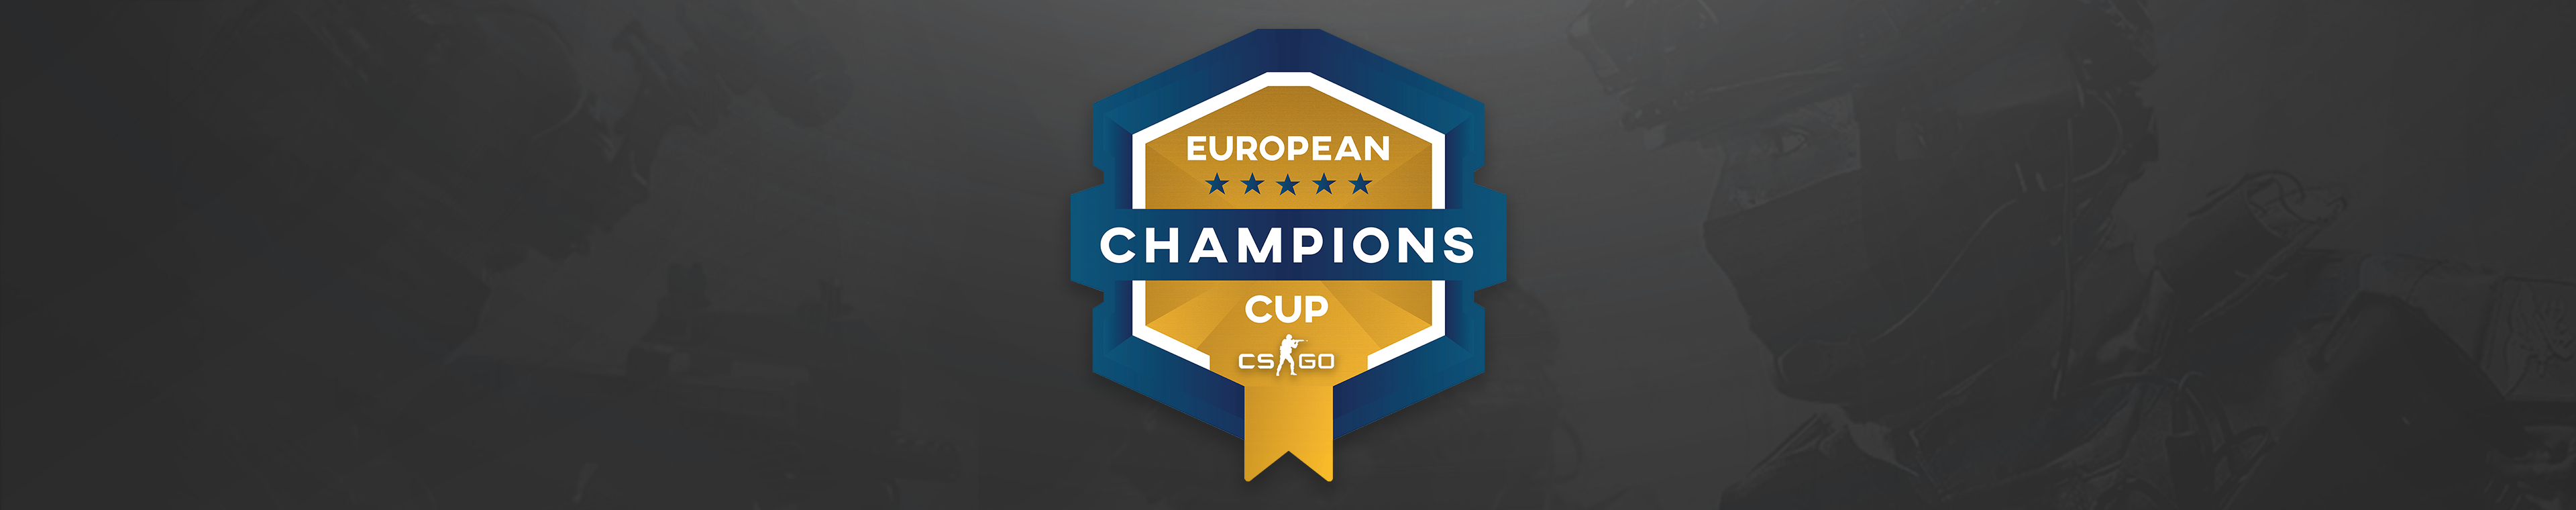 european champions cup final